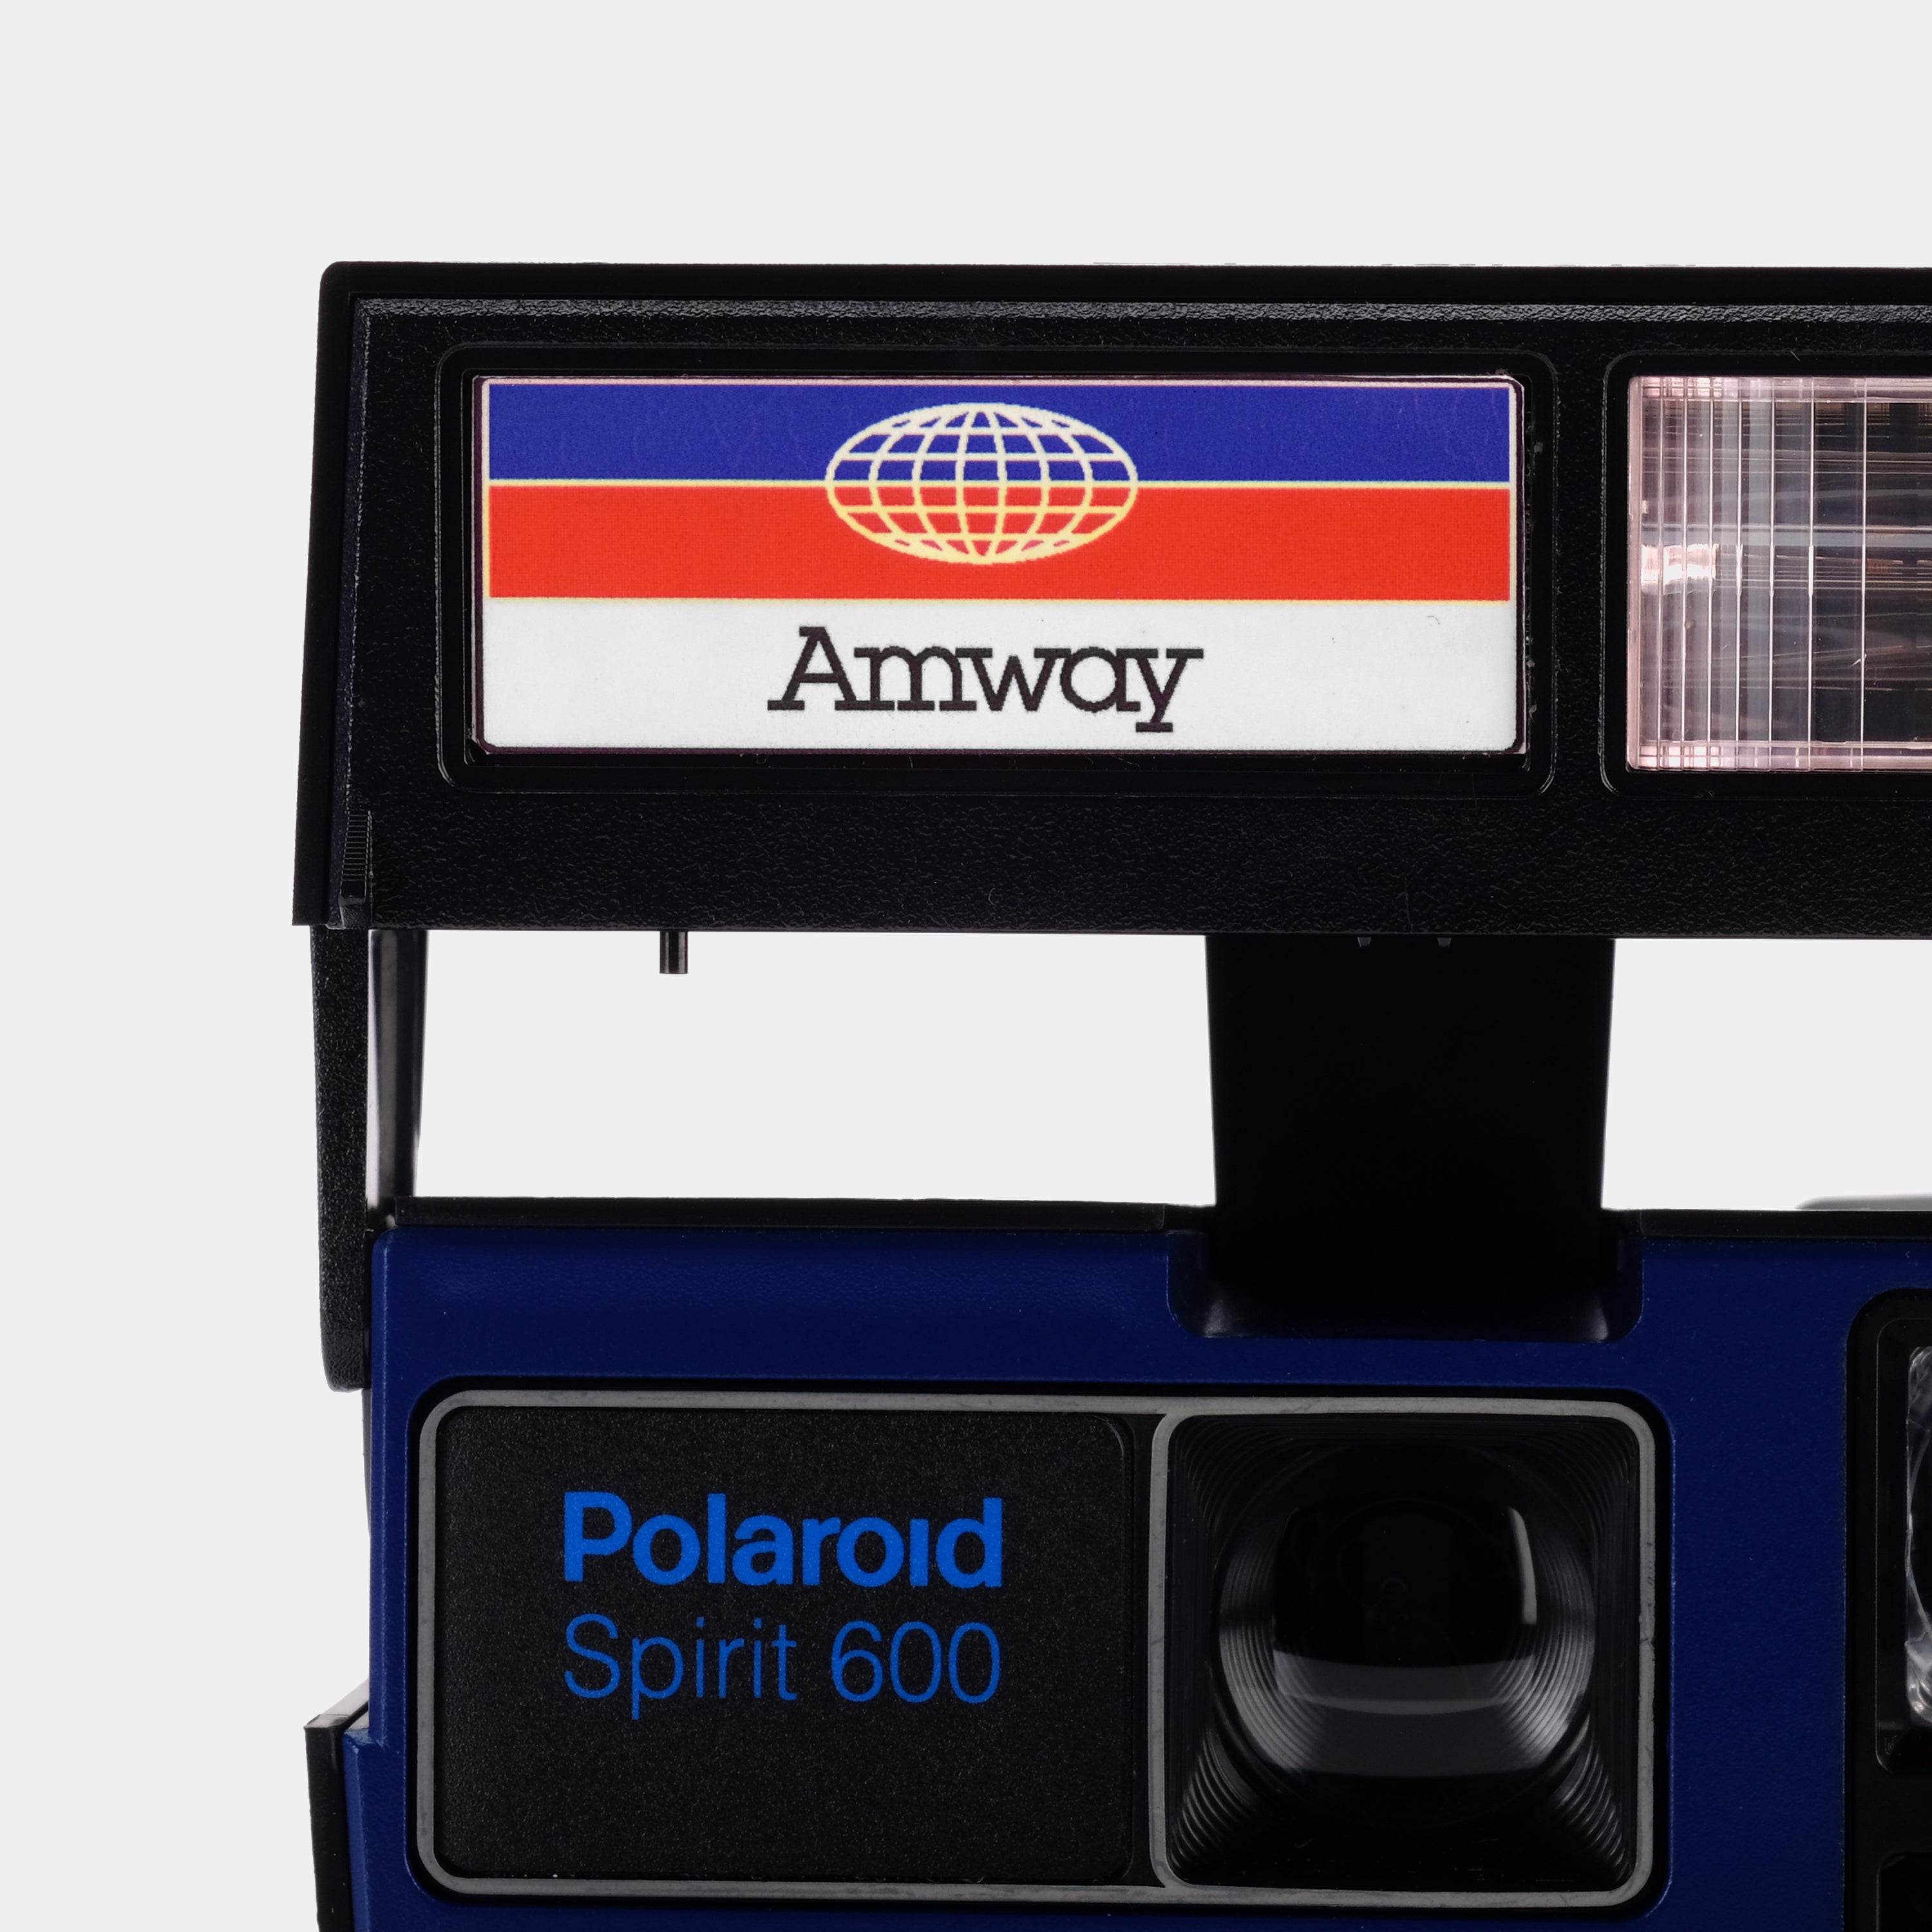 Polaroid Spirit 600 Grey Silver Instant Film Camera Vintage Polaroid 600  Type Film Camera